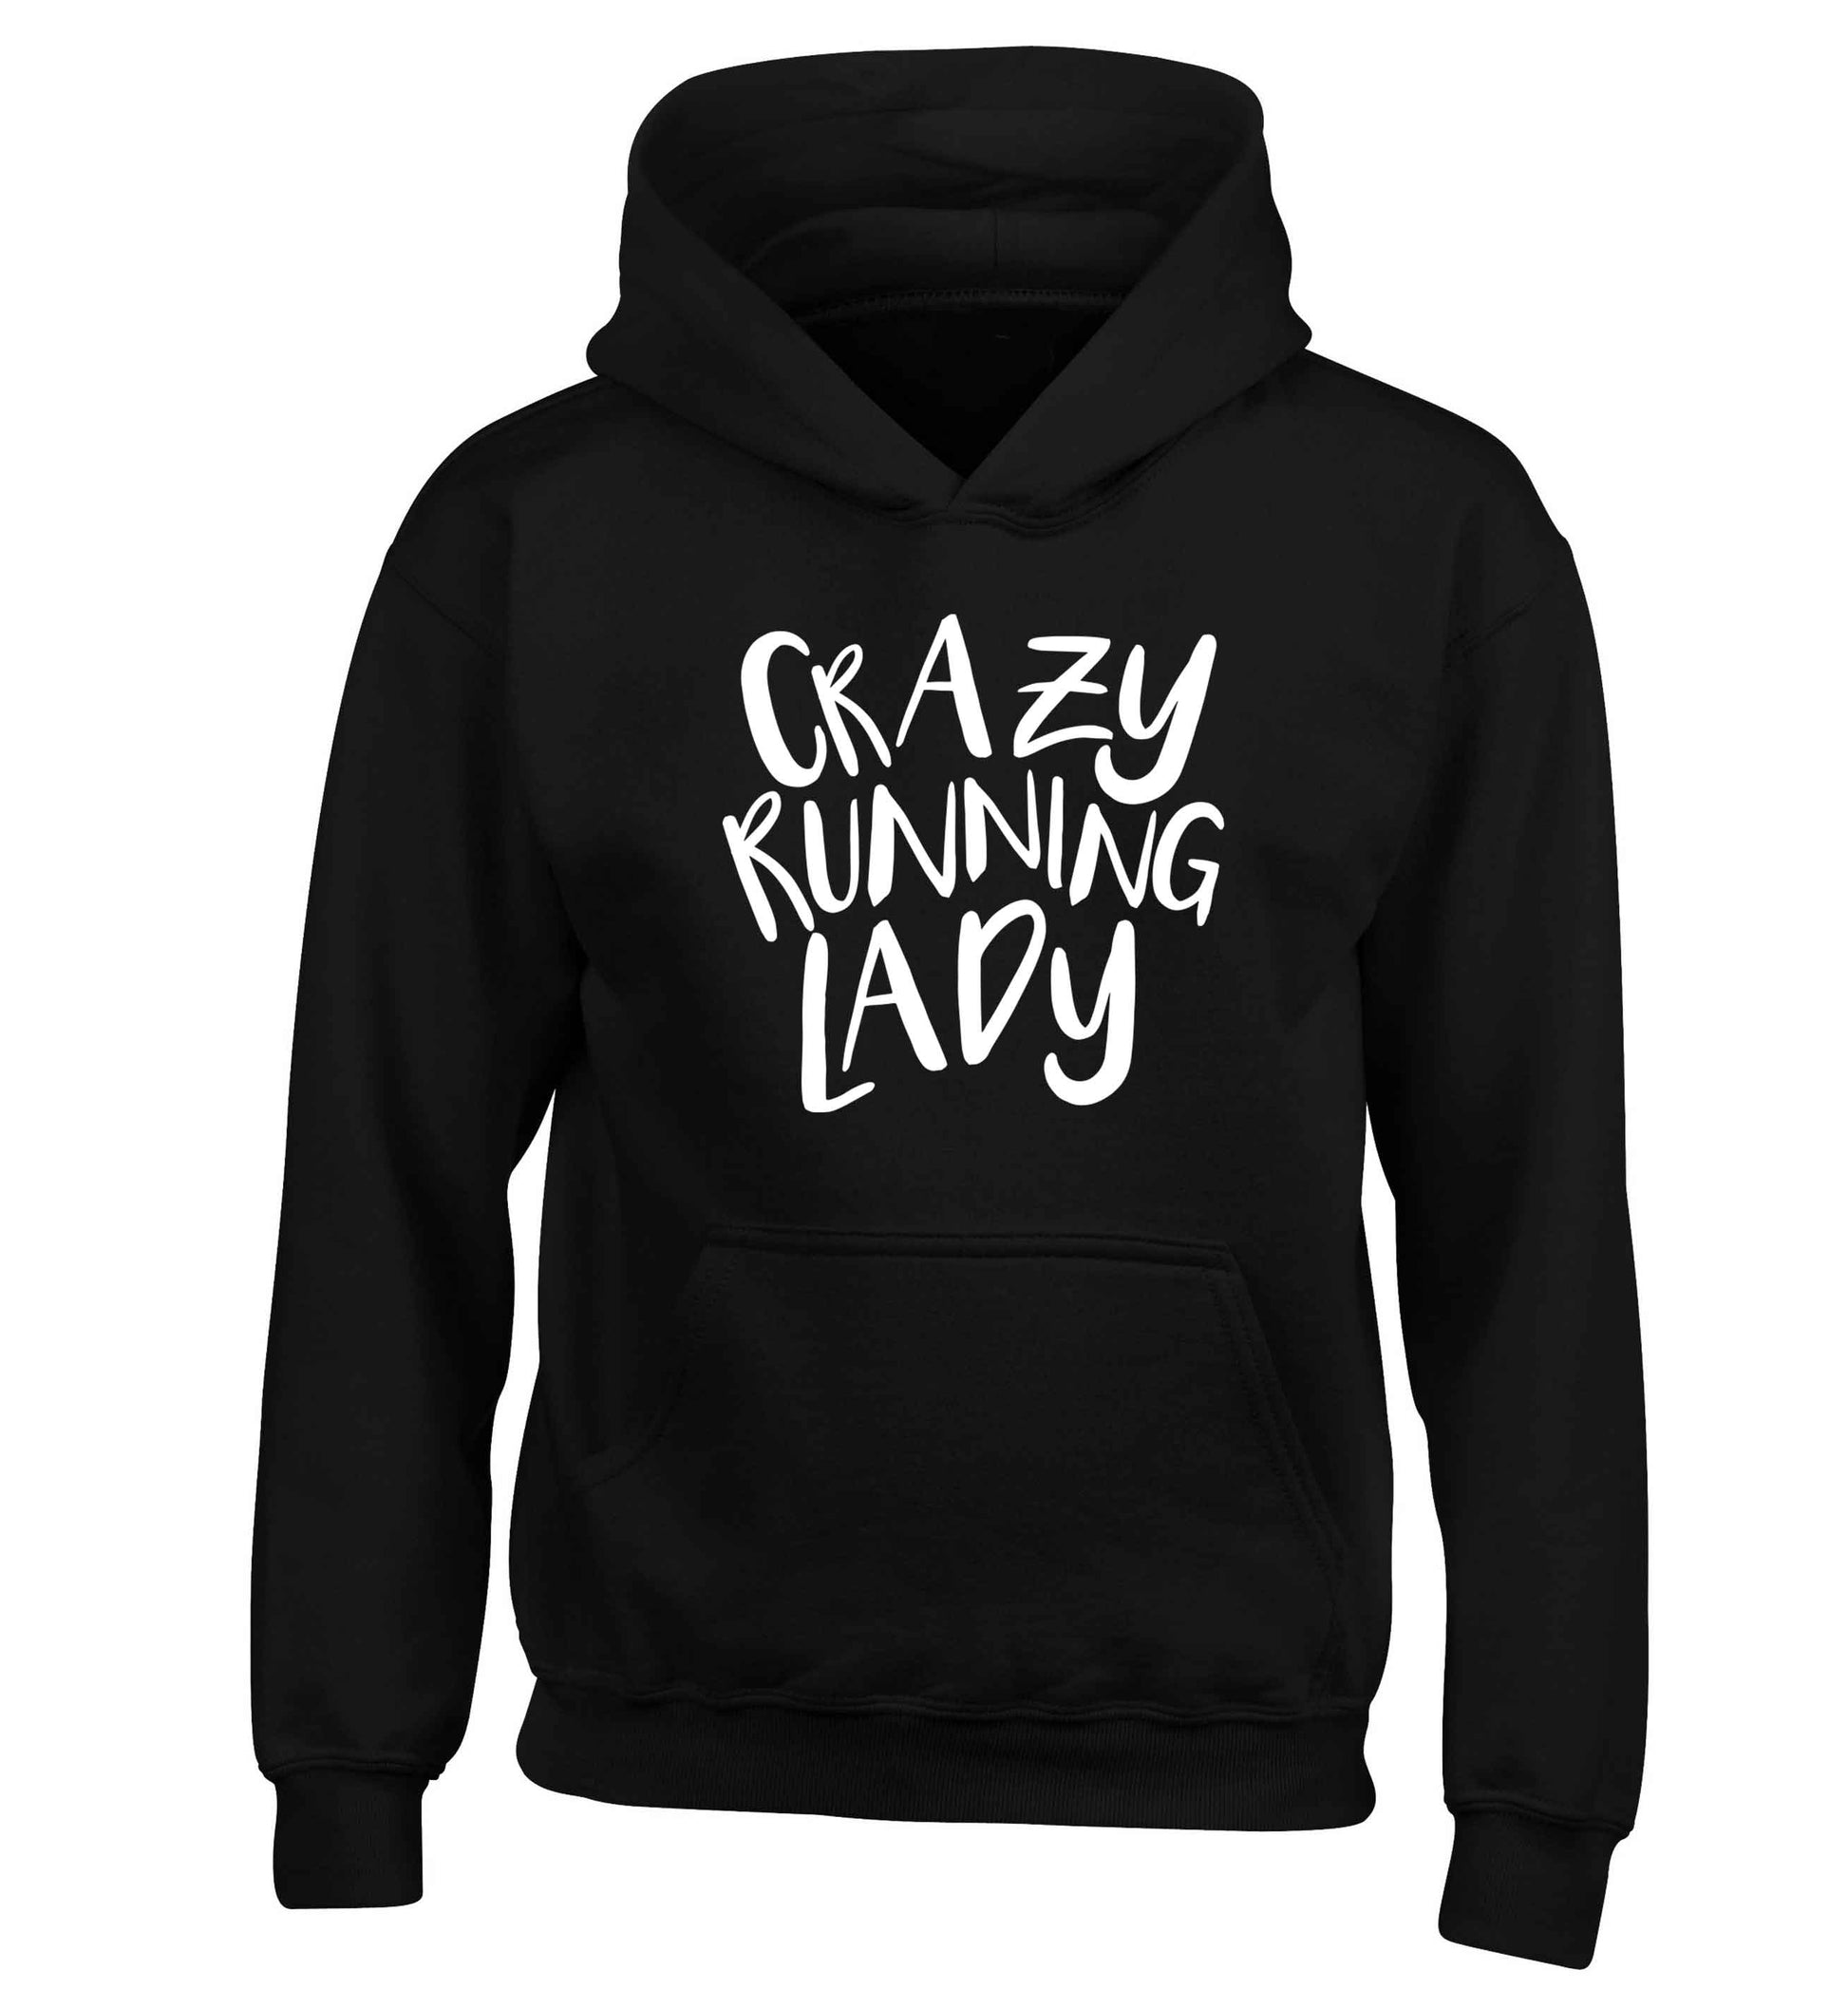 Crazy running lady children's black hoodie 12-13 Years